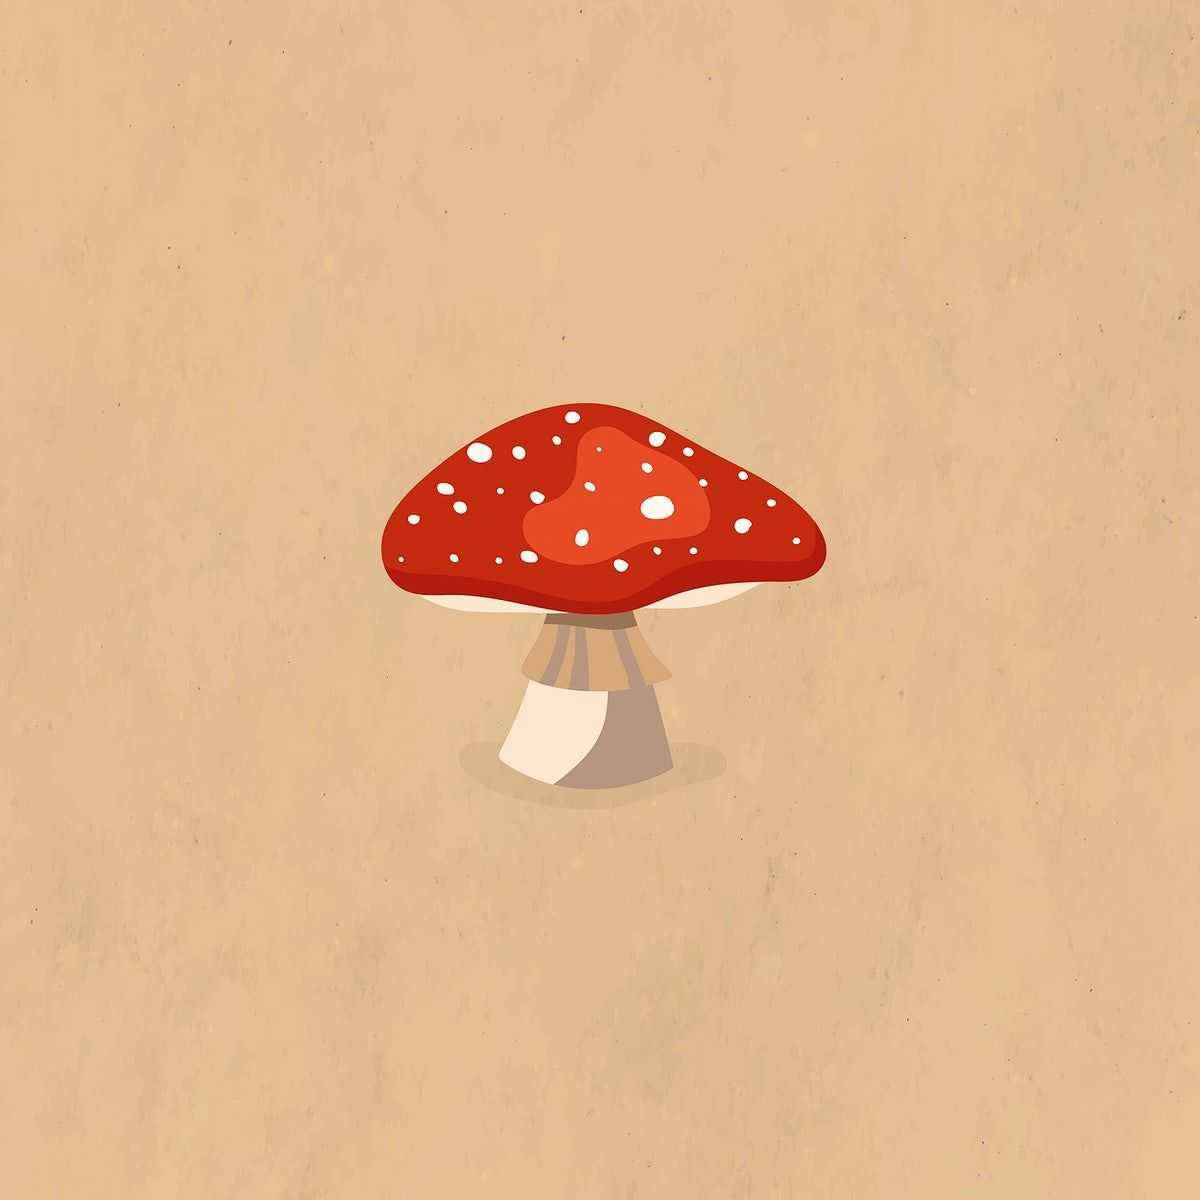 Red Cap Mushroom Aesthetic